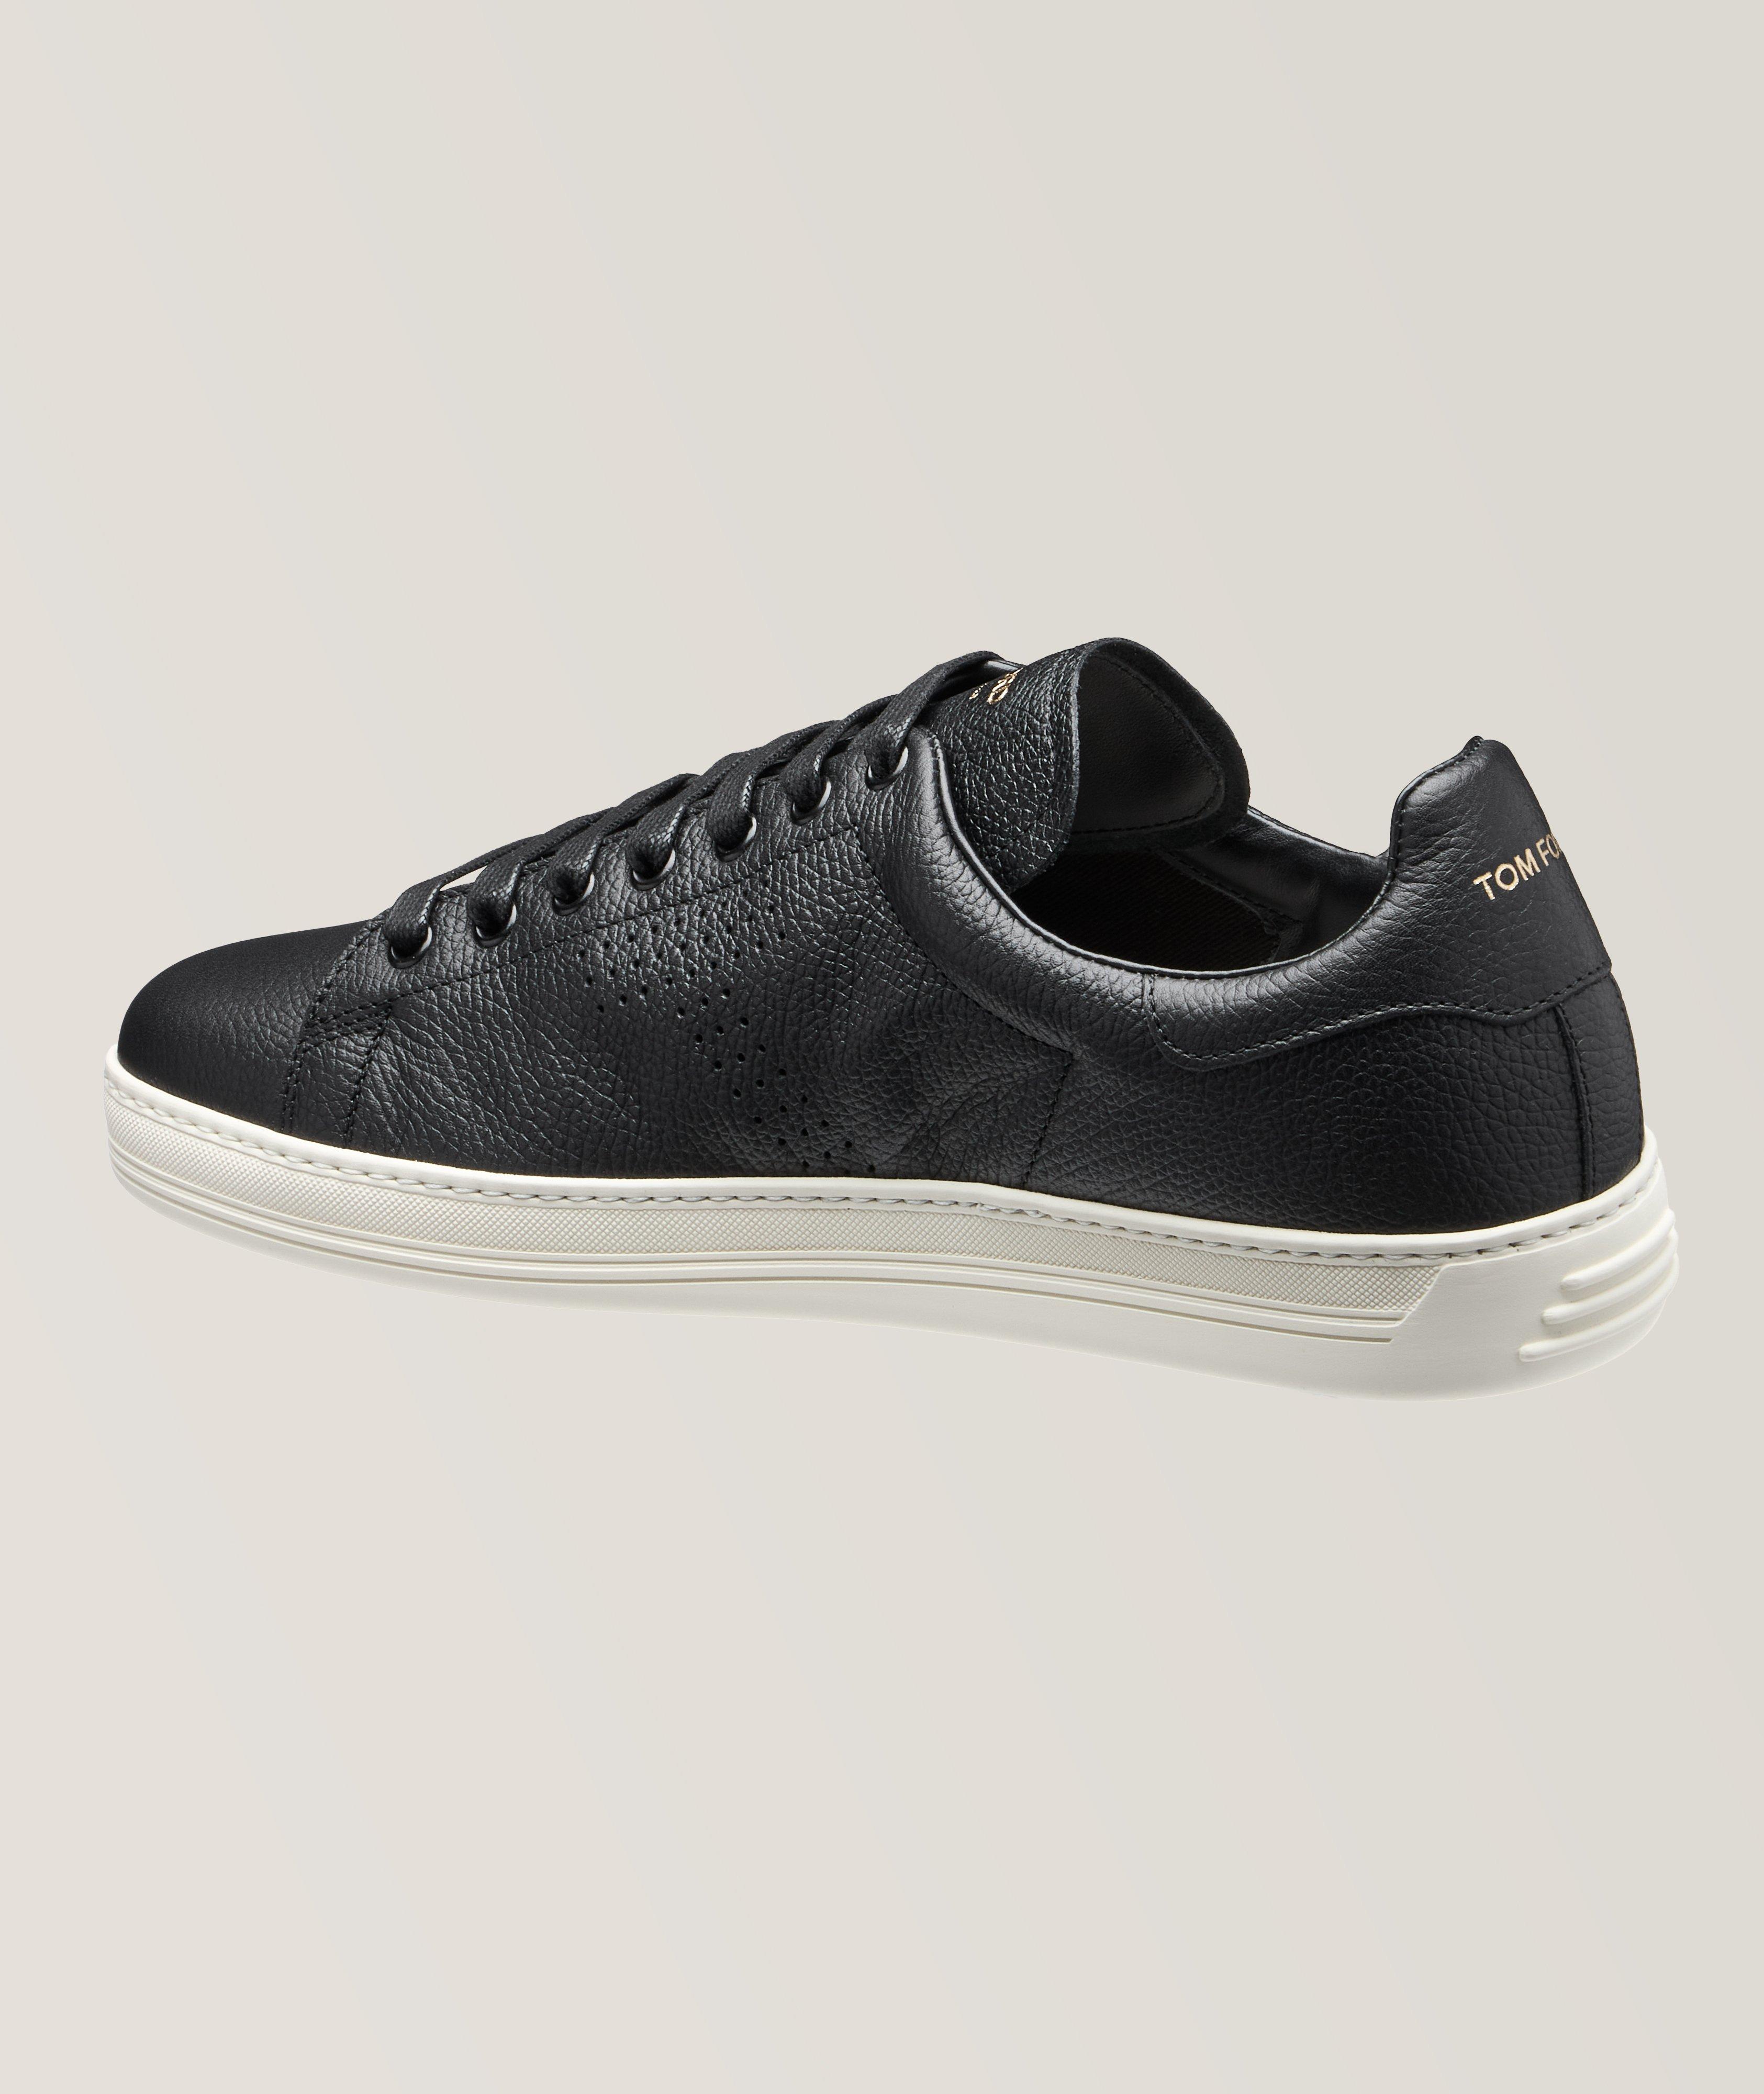 Warwick Leather Sneakers image 1